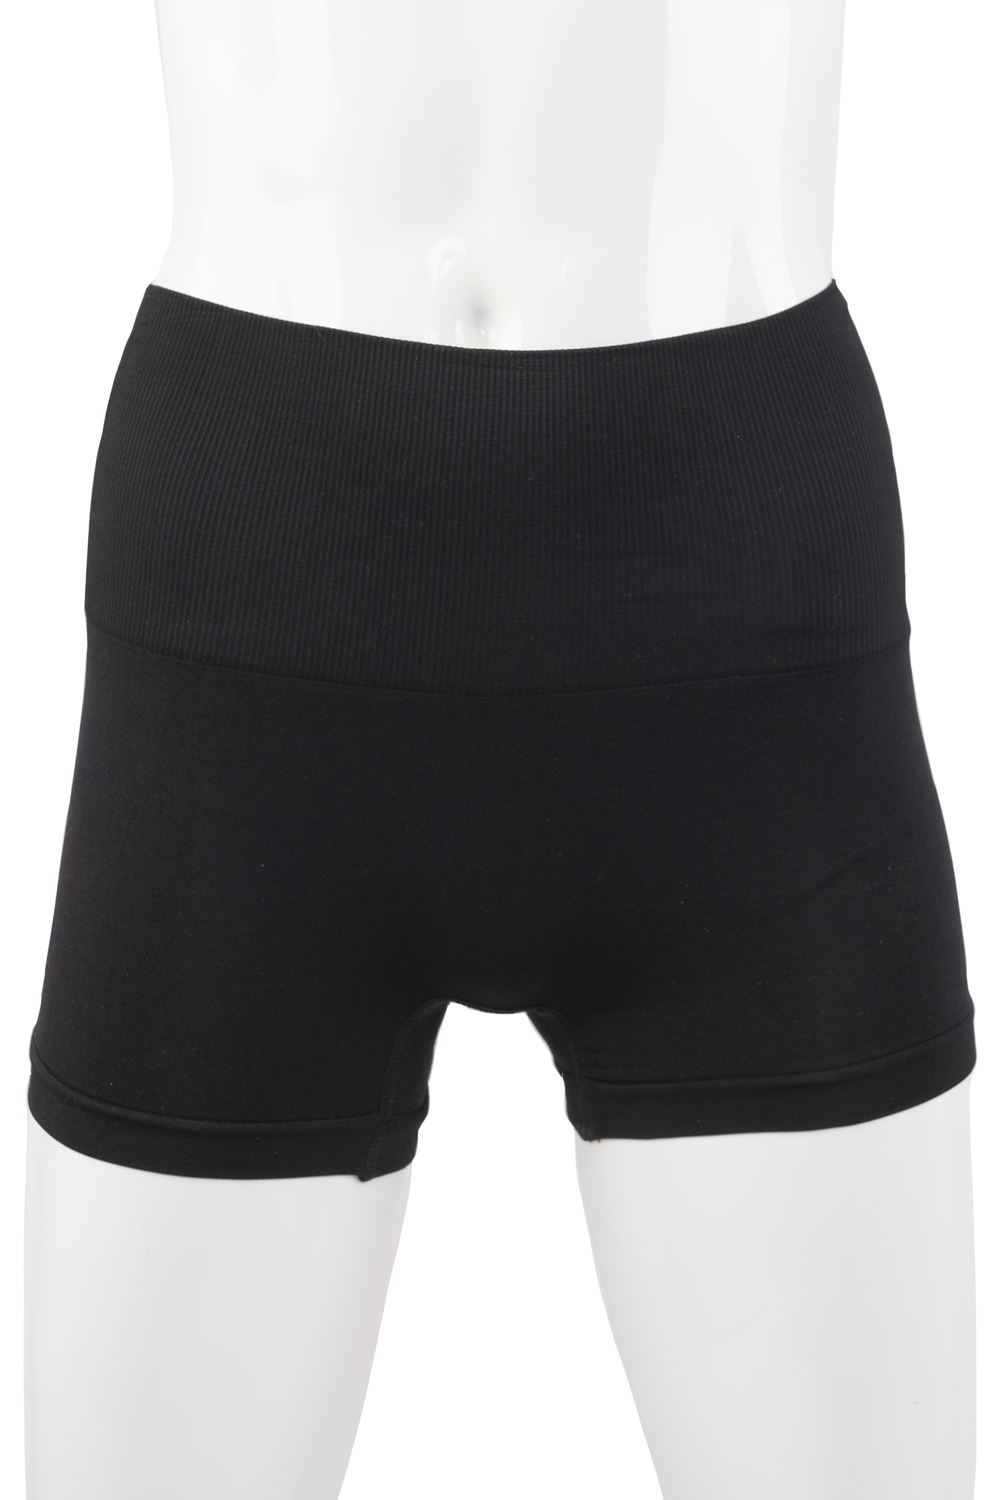 Seamless Boy Shorts Slipshort Dance Short One Size (One size Fits All,  Black)